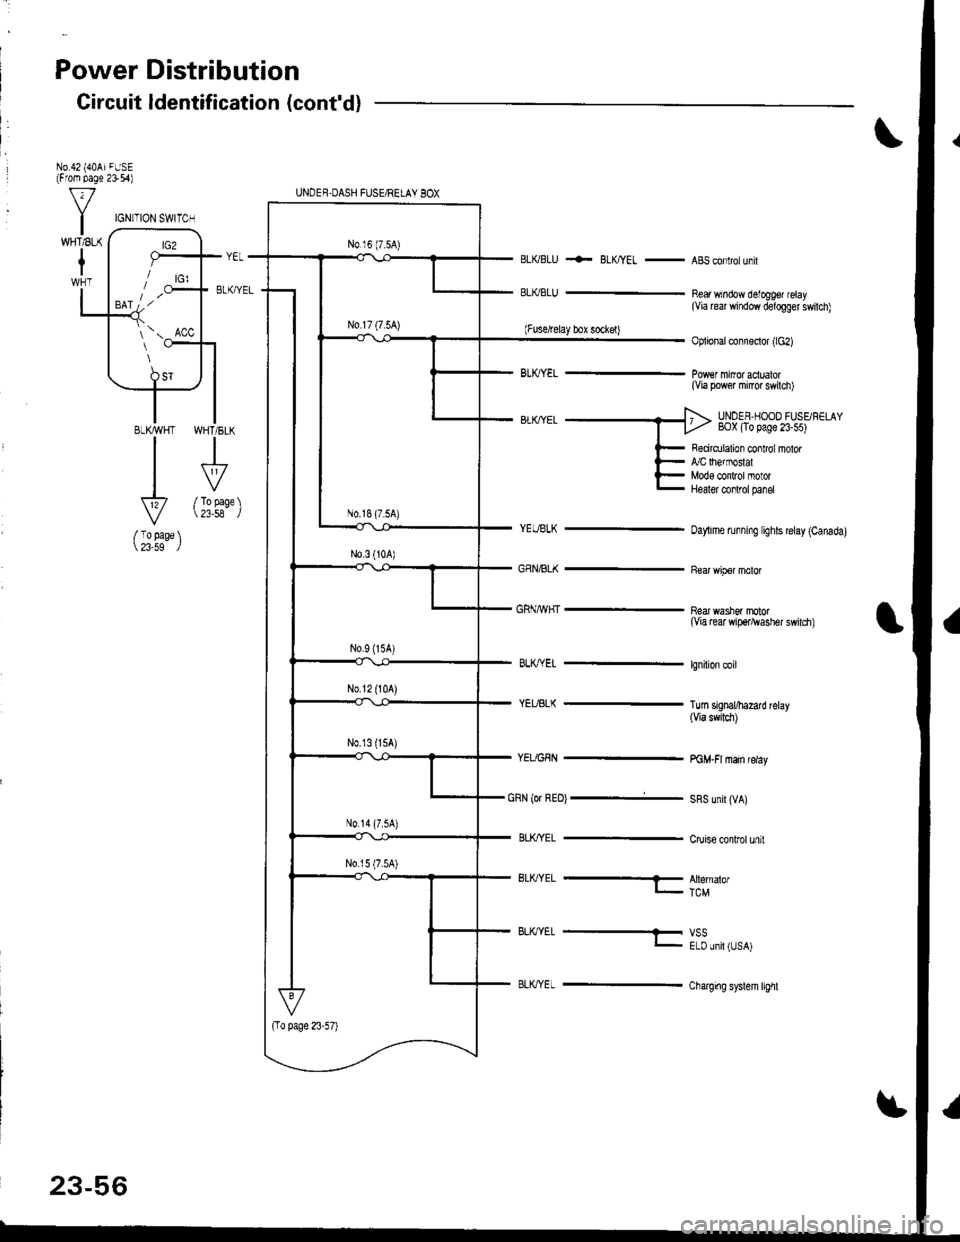 HONDA INTEGRA 1998 4.G User Guide Power Distribution
Gircuit ldentification (contd)
No.42 {40AiFUSE(From page 2154)
BLKBLU
ELKBLU
+- BLK/YEL -ABSconlrolunil
Bear window detoggef relay(Via re window delogger swilch)
Oplional connoctor